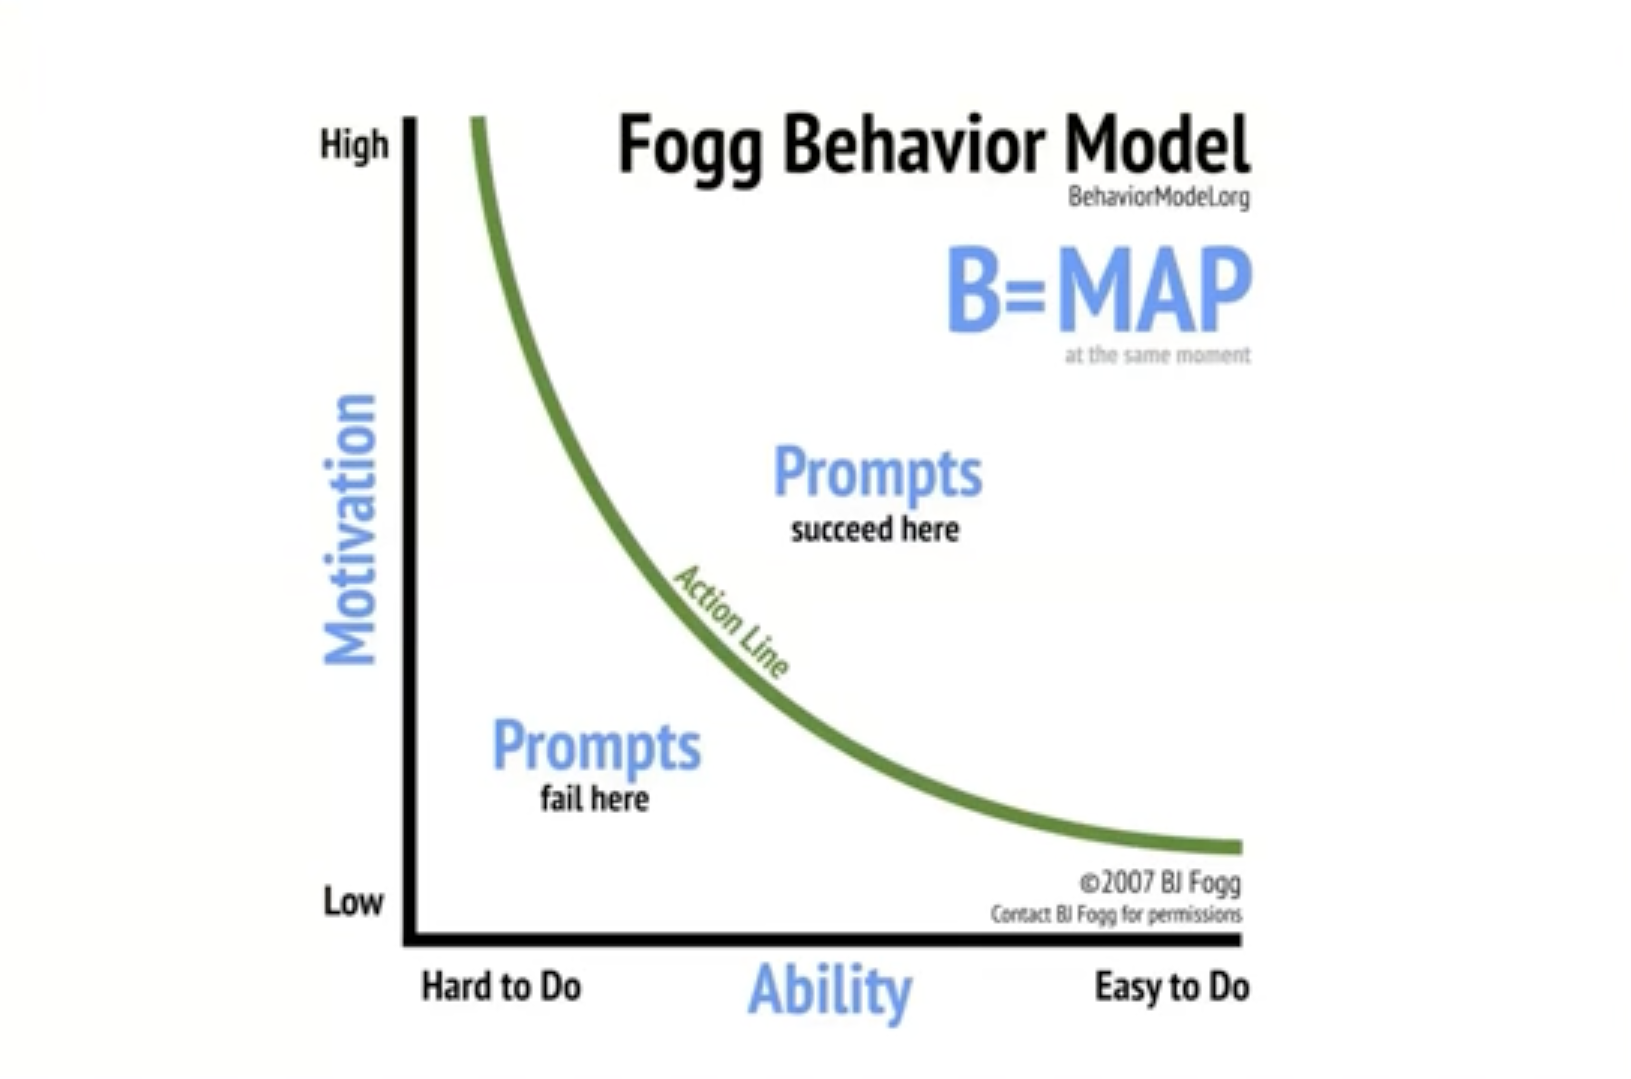 Fogg Behavior Model of what elements behavior depends on